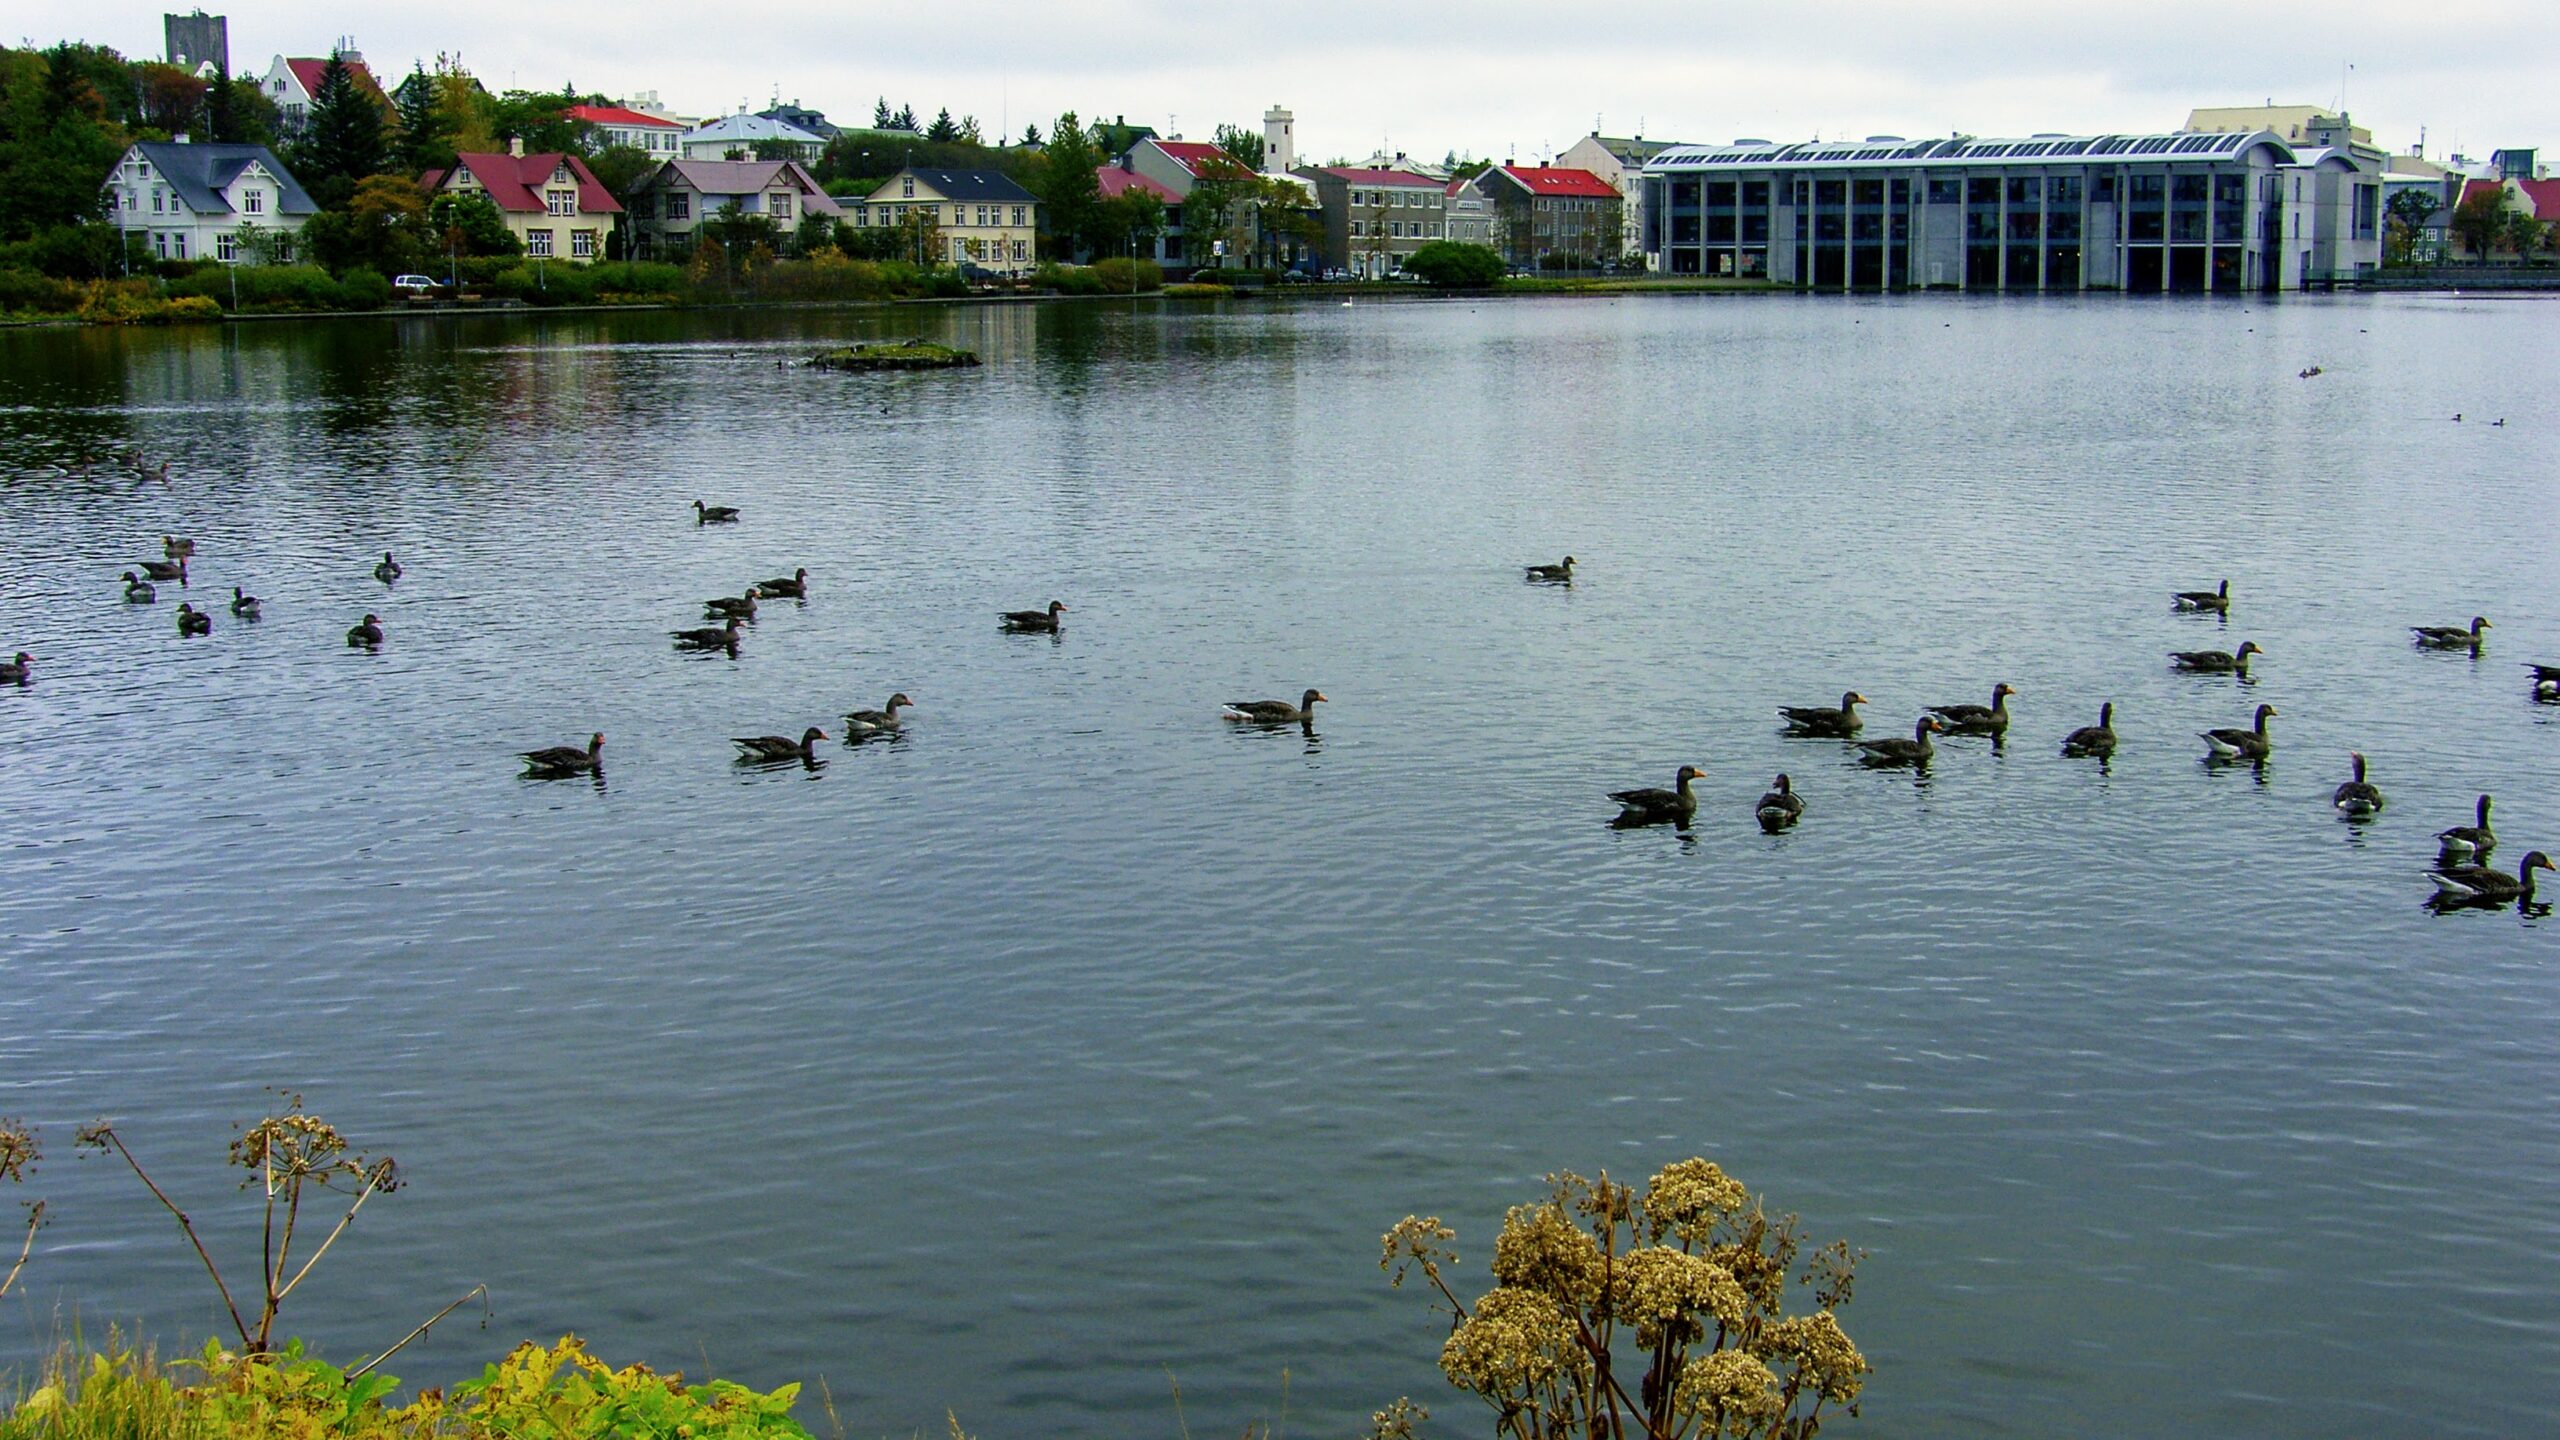 Reykjavik Pond Town Hall